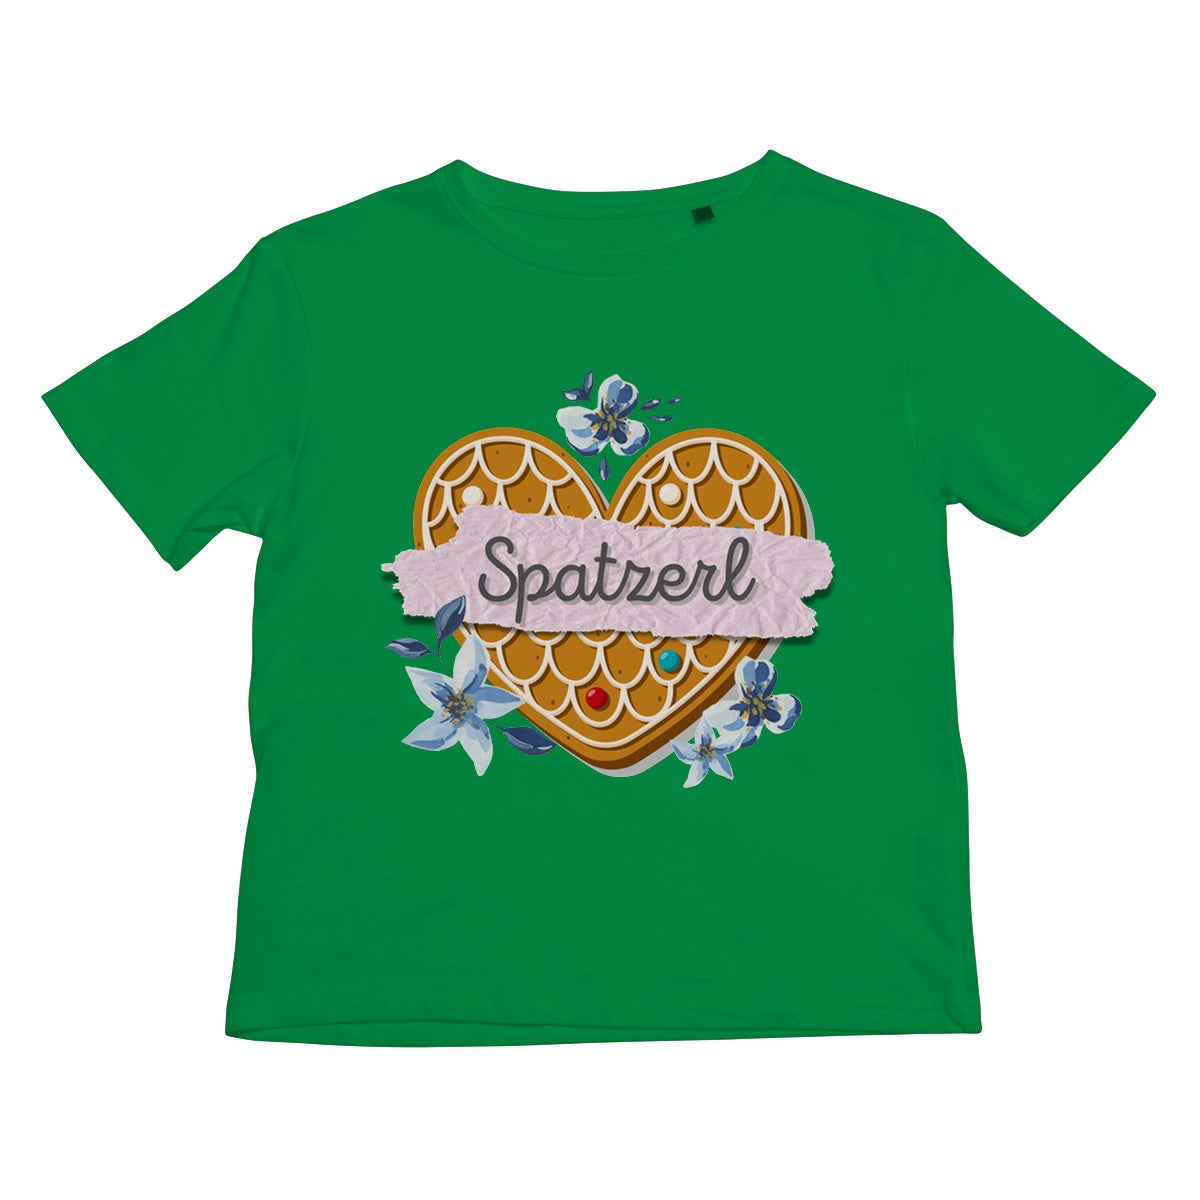 Girl's Bavarian Graphic T-Shirt "Spatzerl" gingerbread heart & floral print - 5 colours - Bavari Shop - Bavarian Outfits, Dirndl, Lederhosen & Accessories